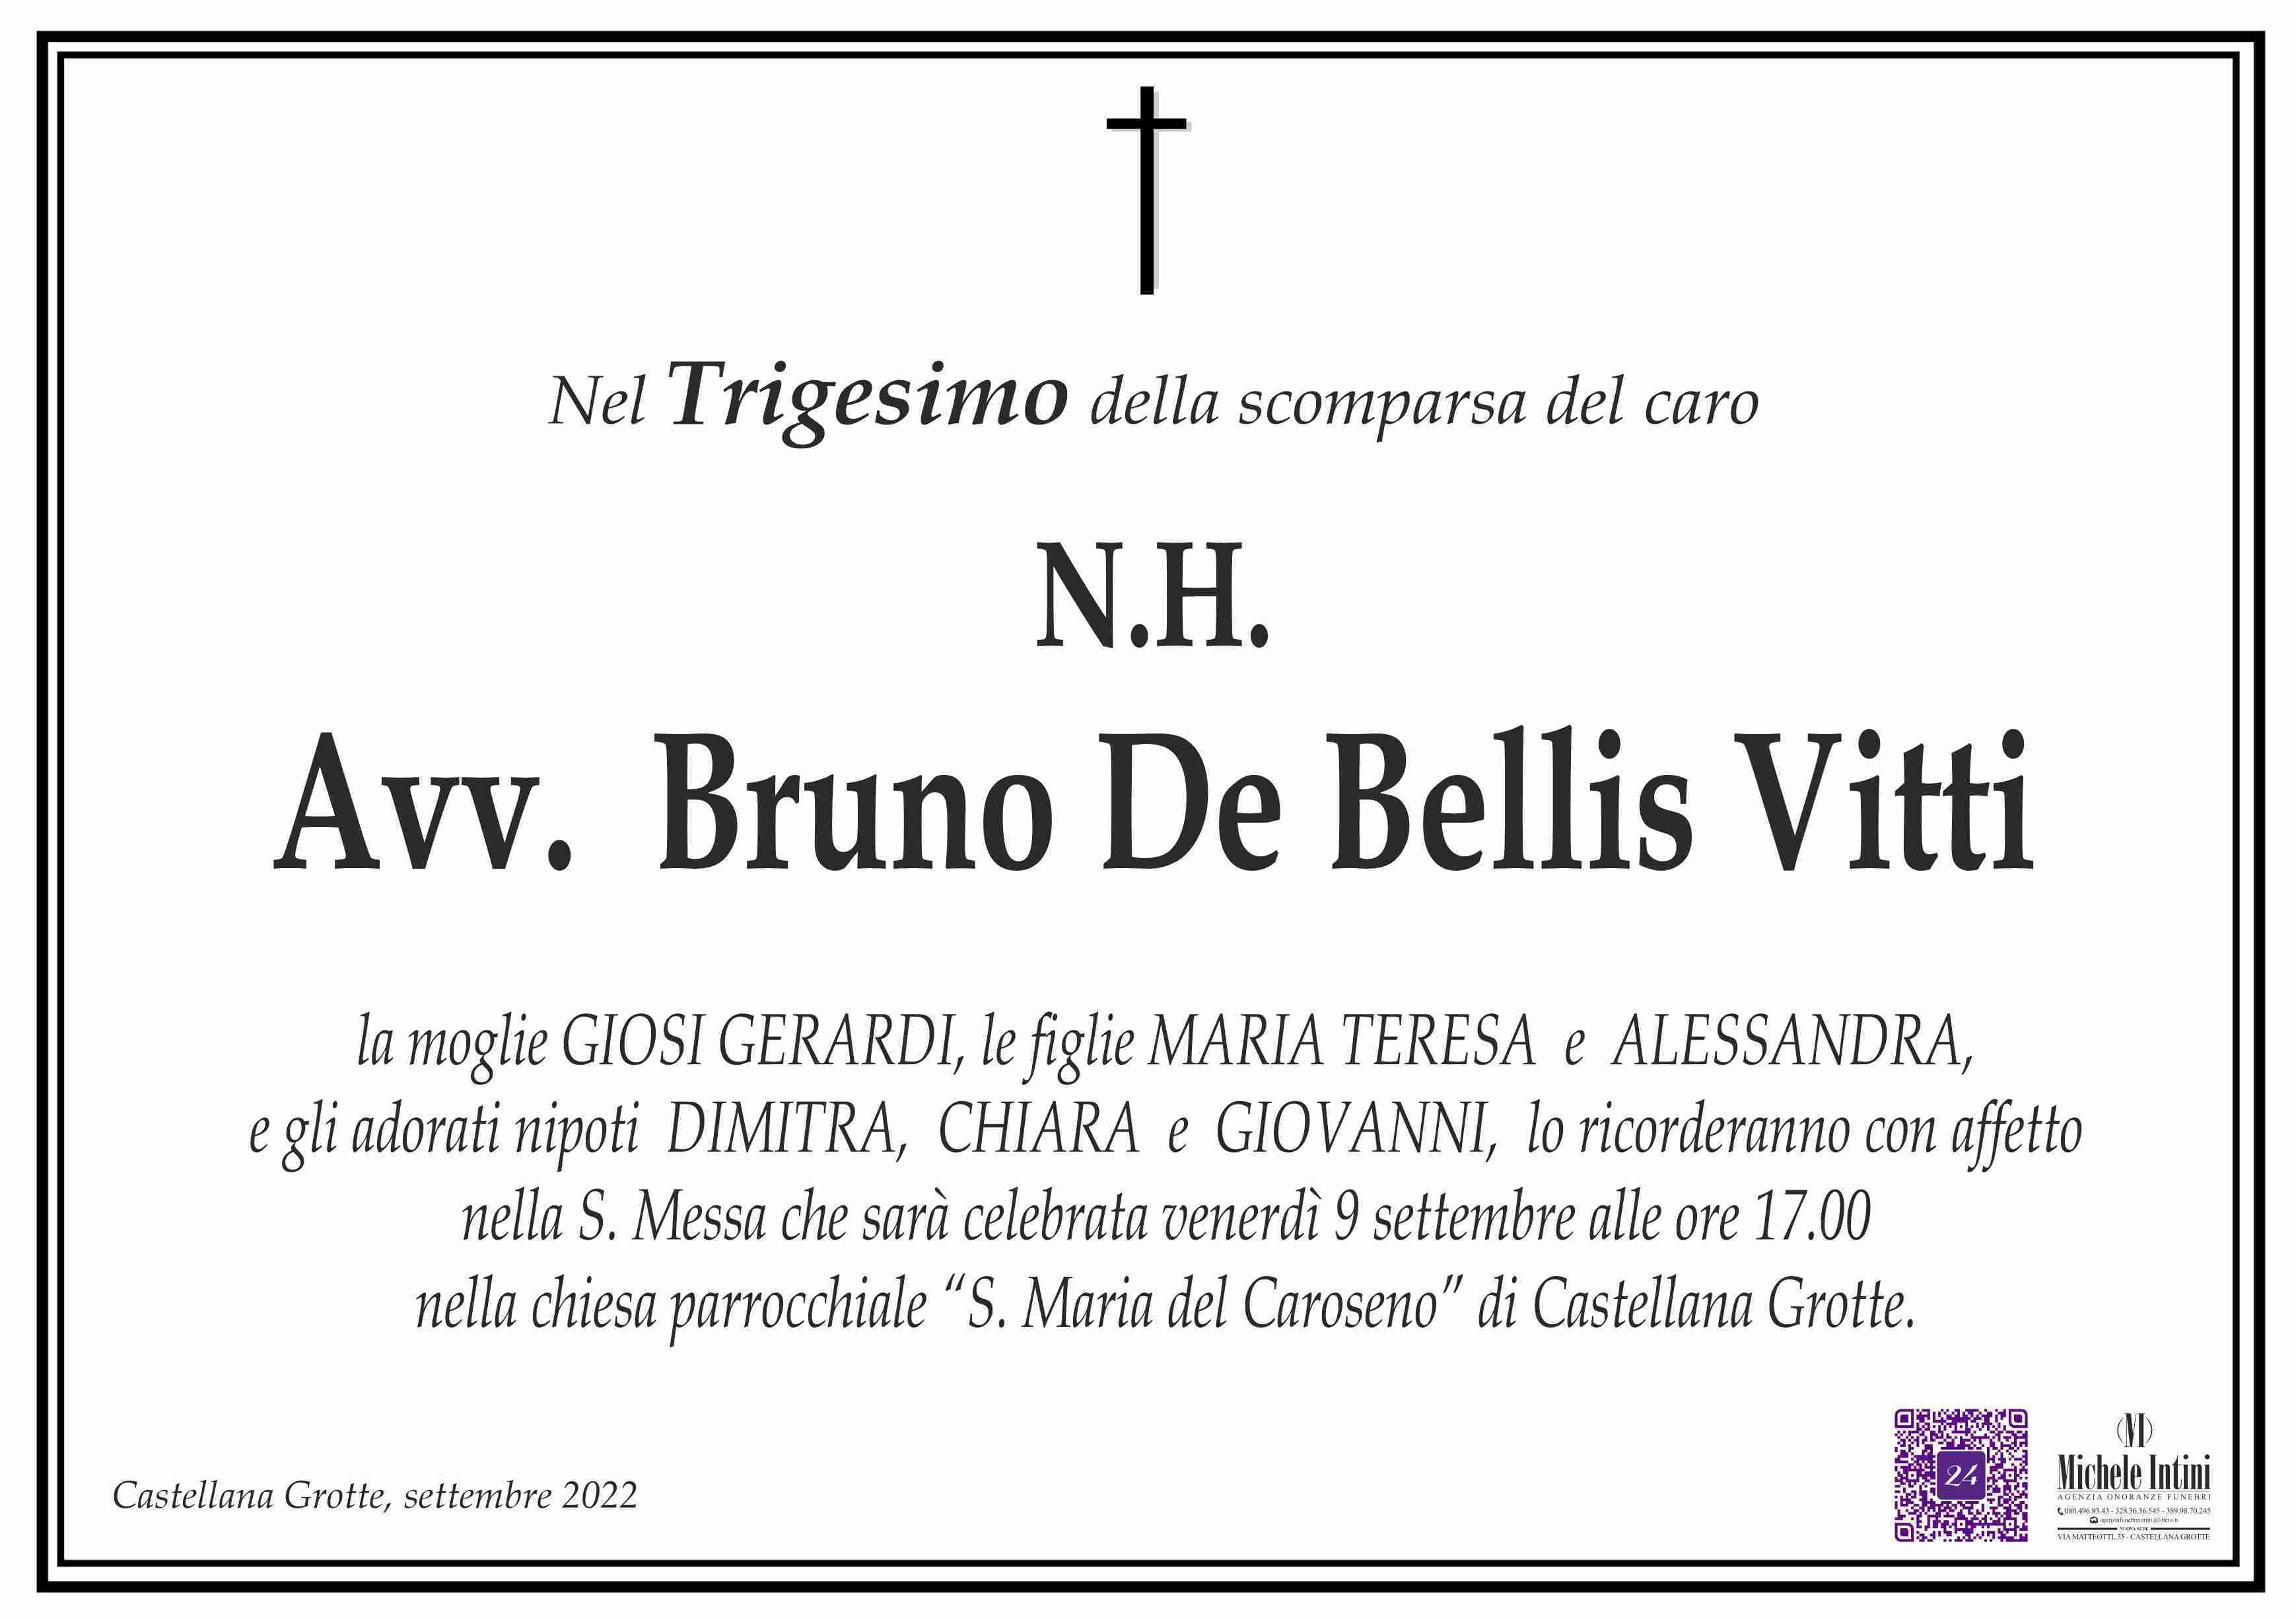 Bruno De Bellis Vitti